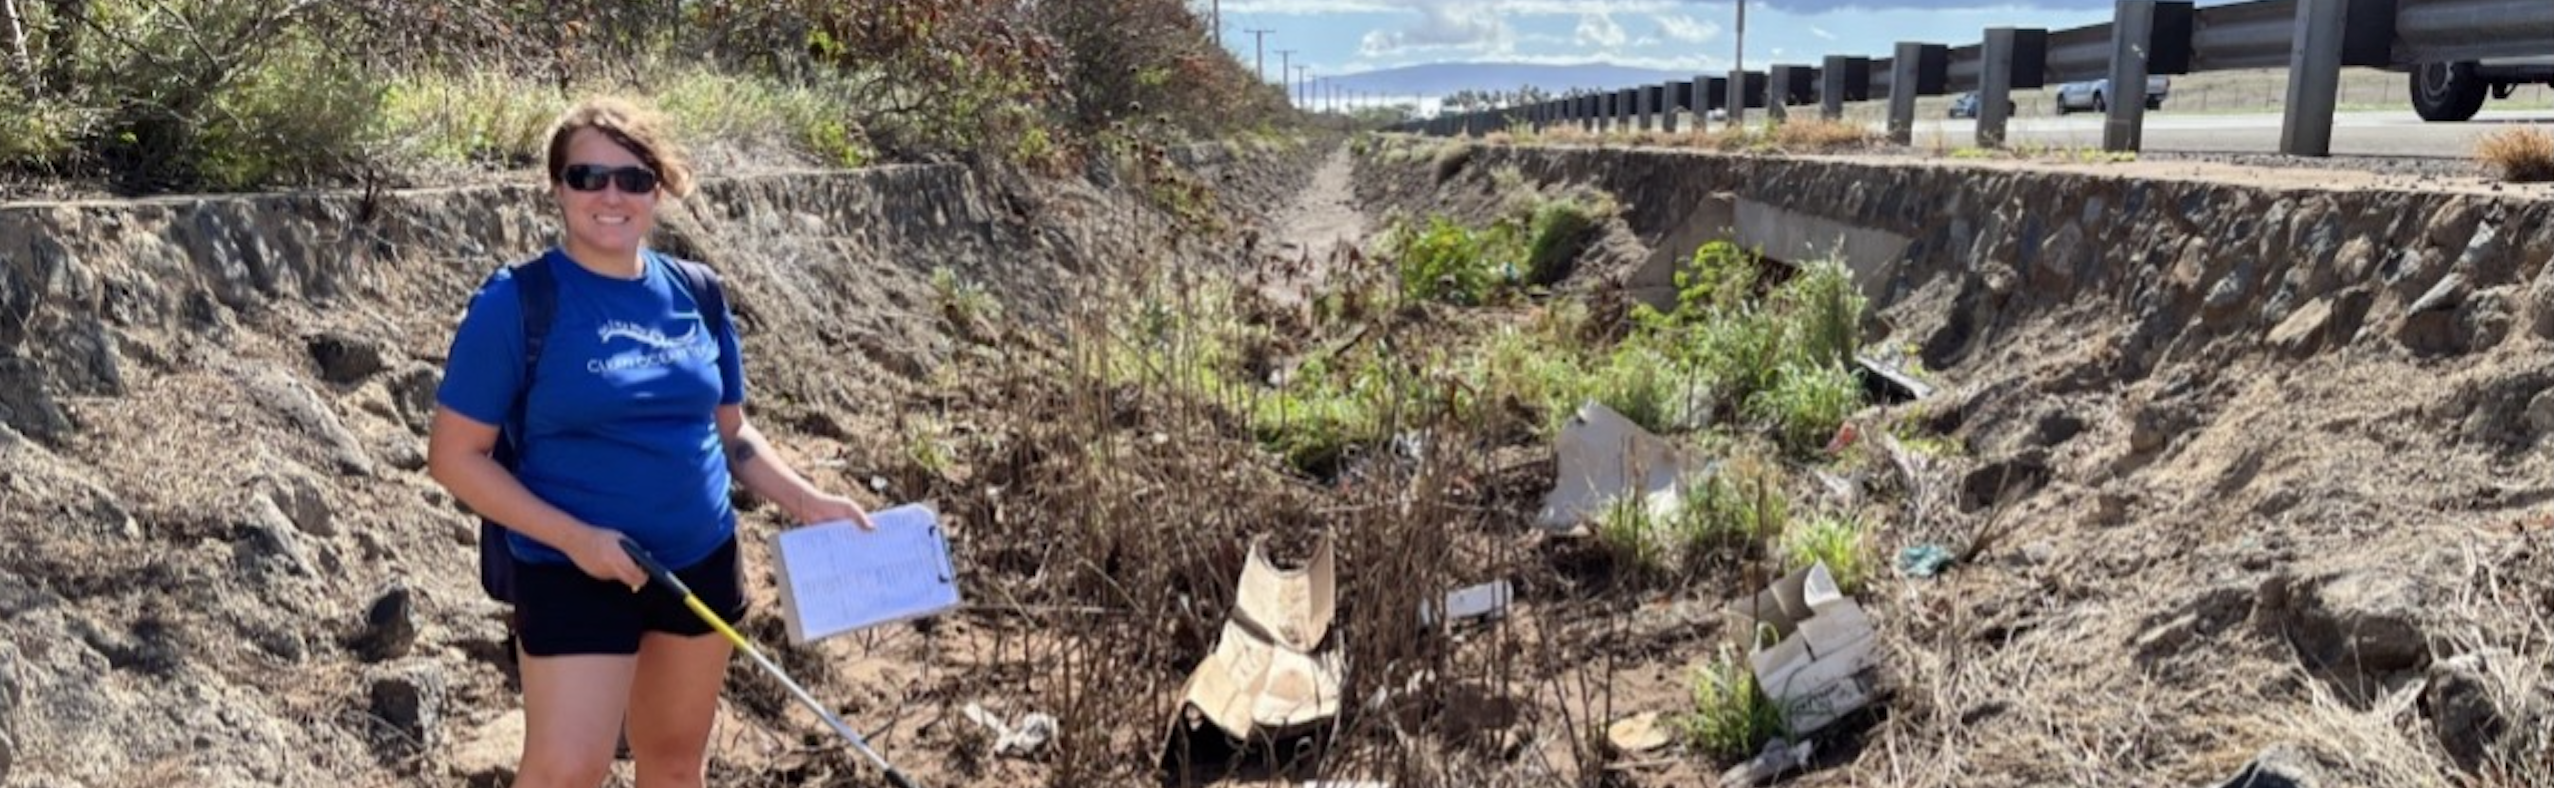 Trash Debris Monitoring Reveals Insights into Marine Debris Origins and the Local Community's Impact on Maui's Beaches.